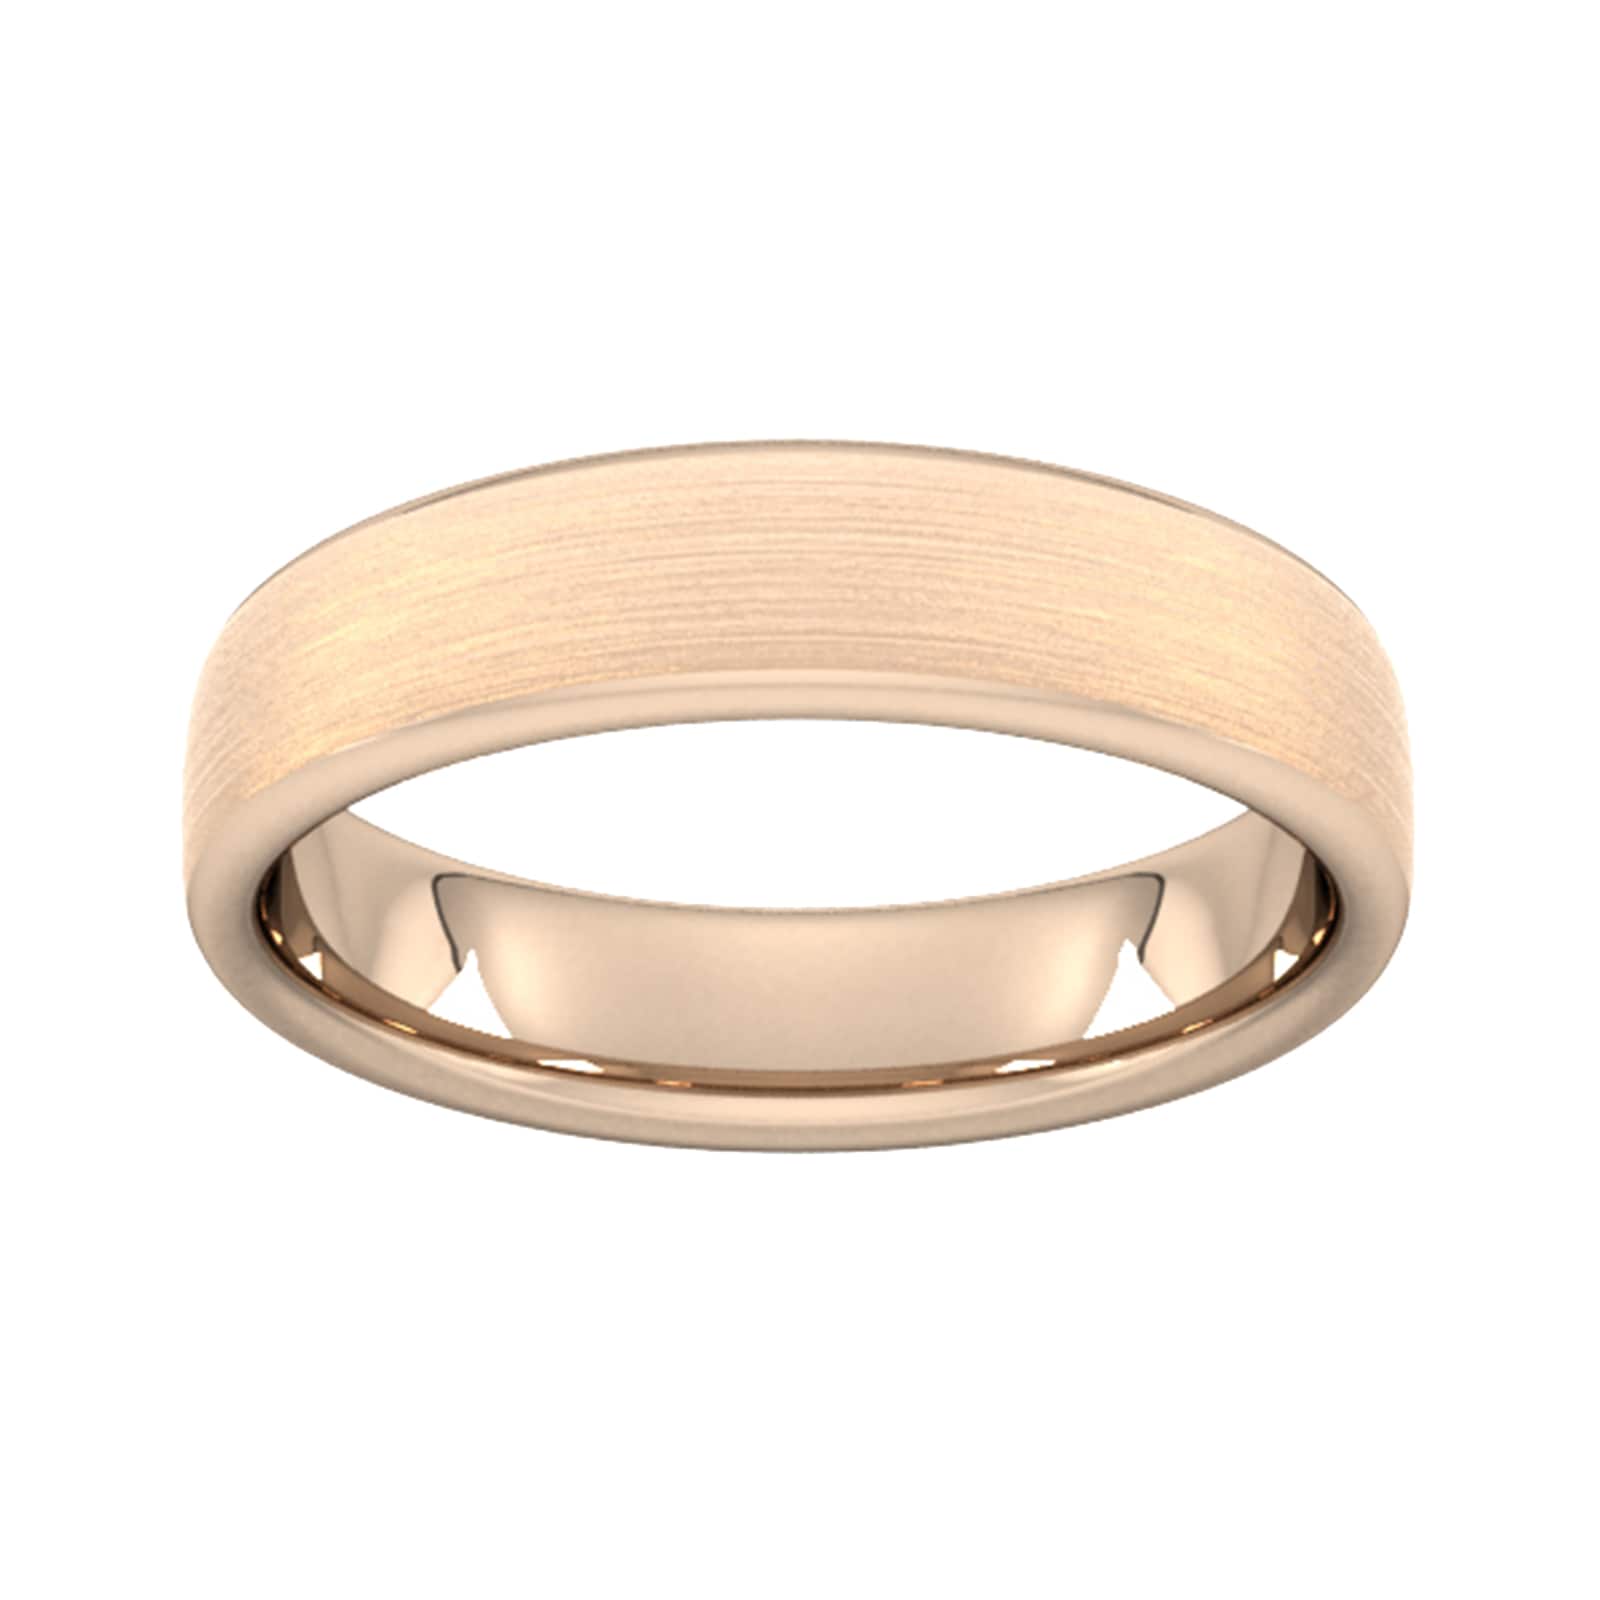 5mm Slight Court Standard Matt Finished Wedding Ring In 18 Carat Rose Gold - Ring Size R